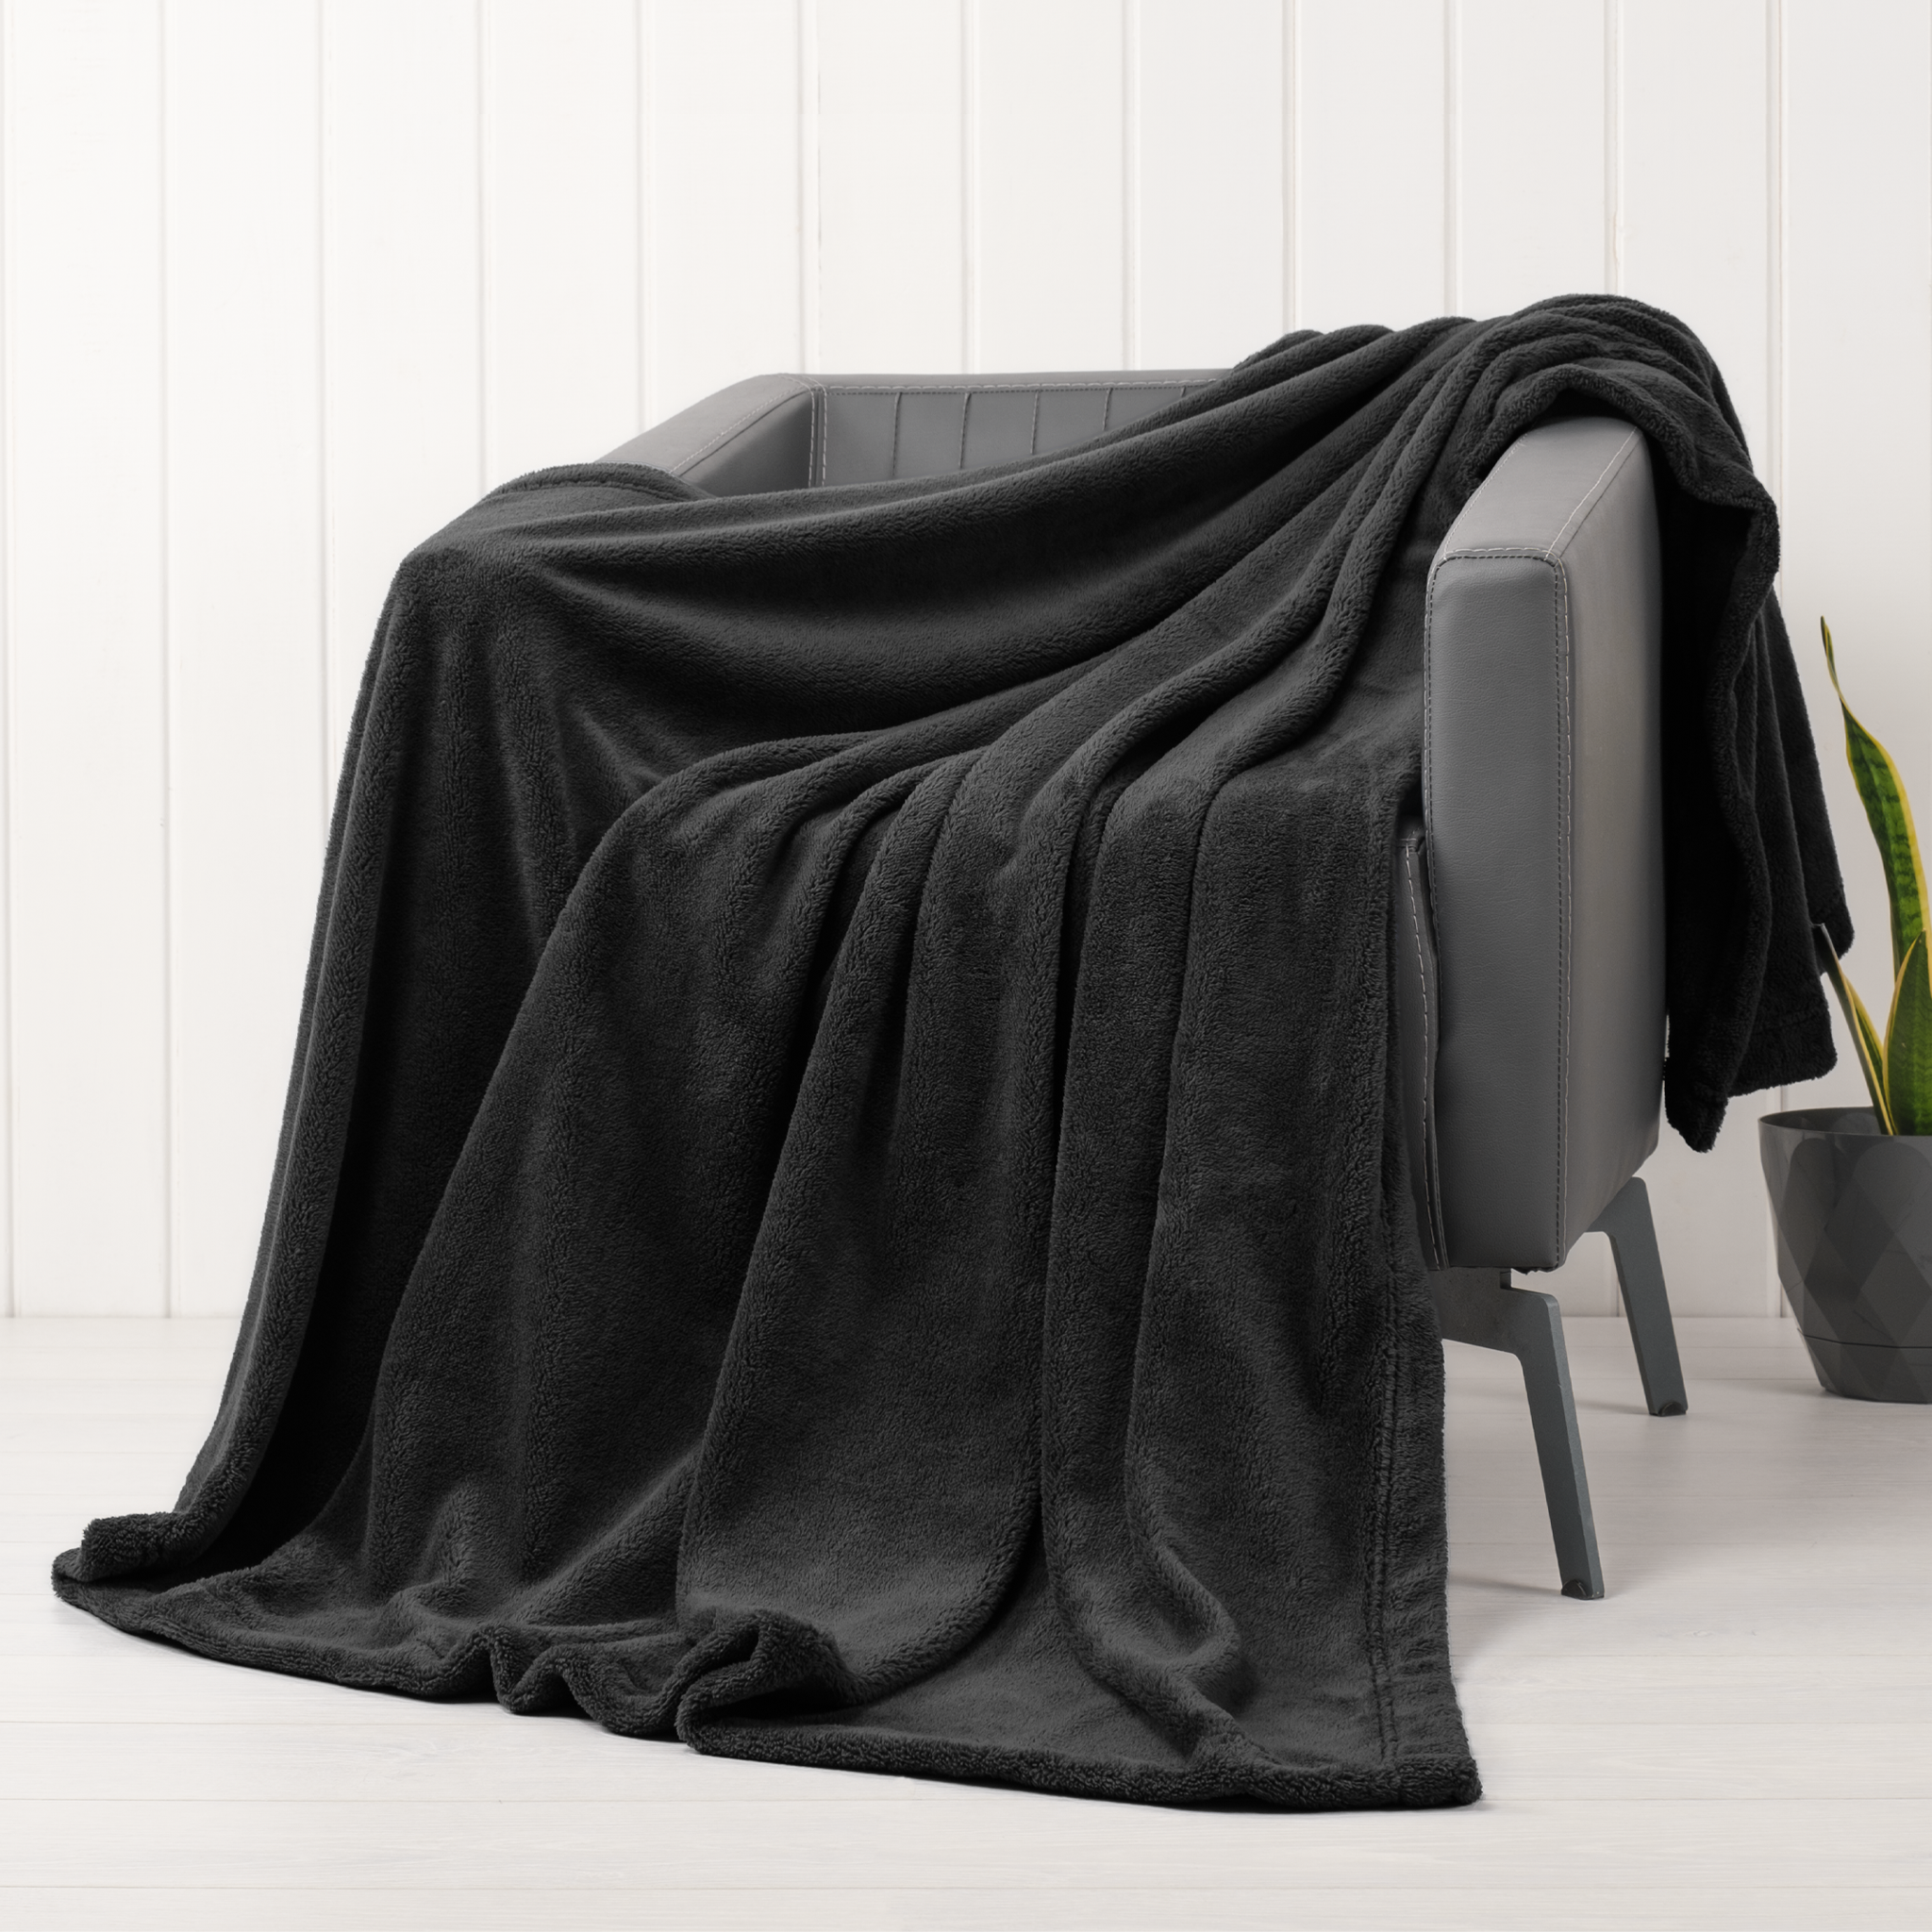 American Soft Linen - Bedding Fleece Blanket - Twin Size 60x80 inches - Black - 1